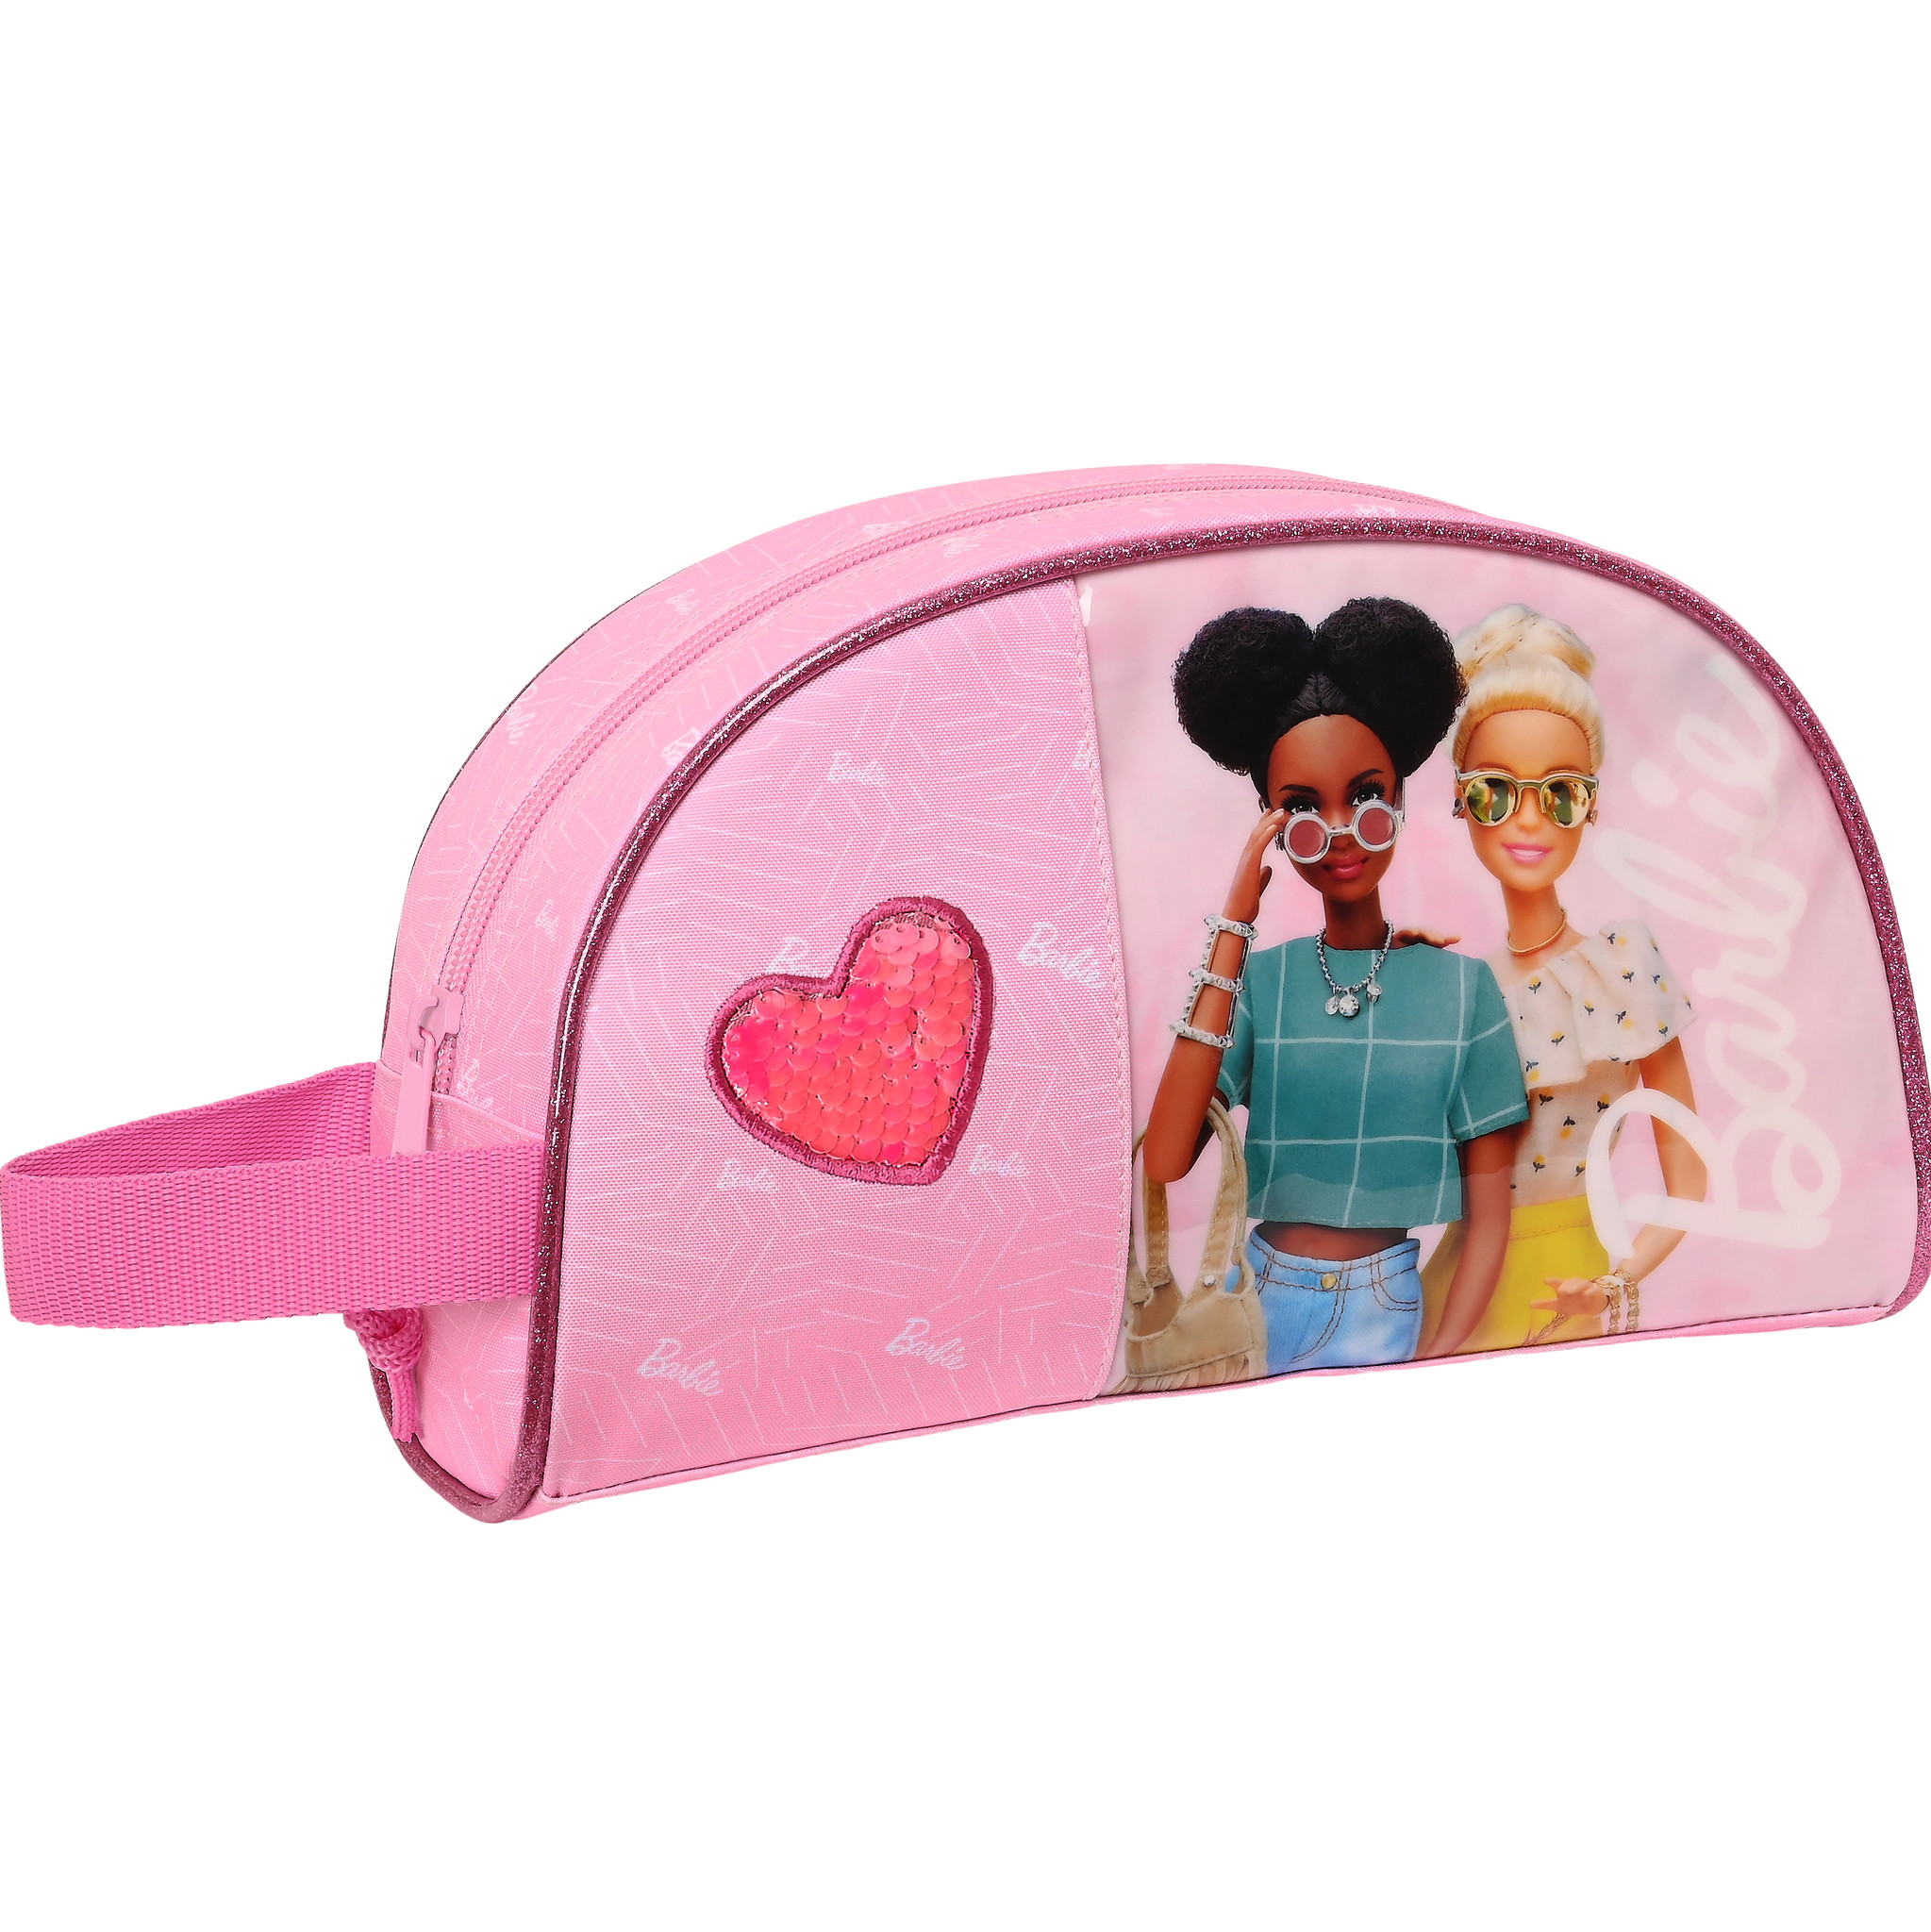 Tote Bag – Barbie Tote / Beach Bag – Girls Can! – Simply Bubs Merchandise